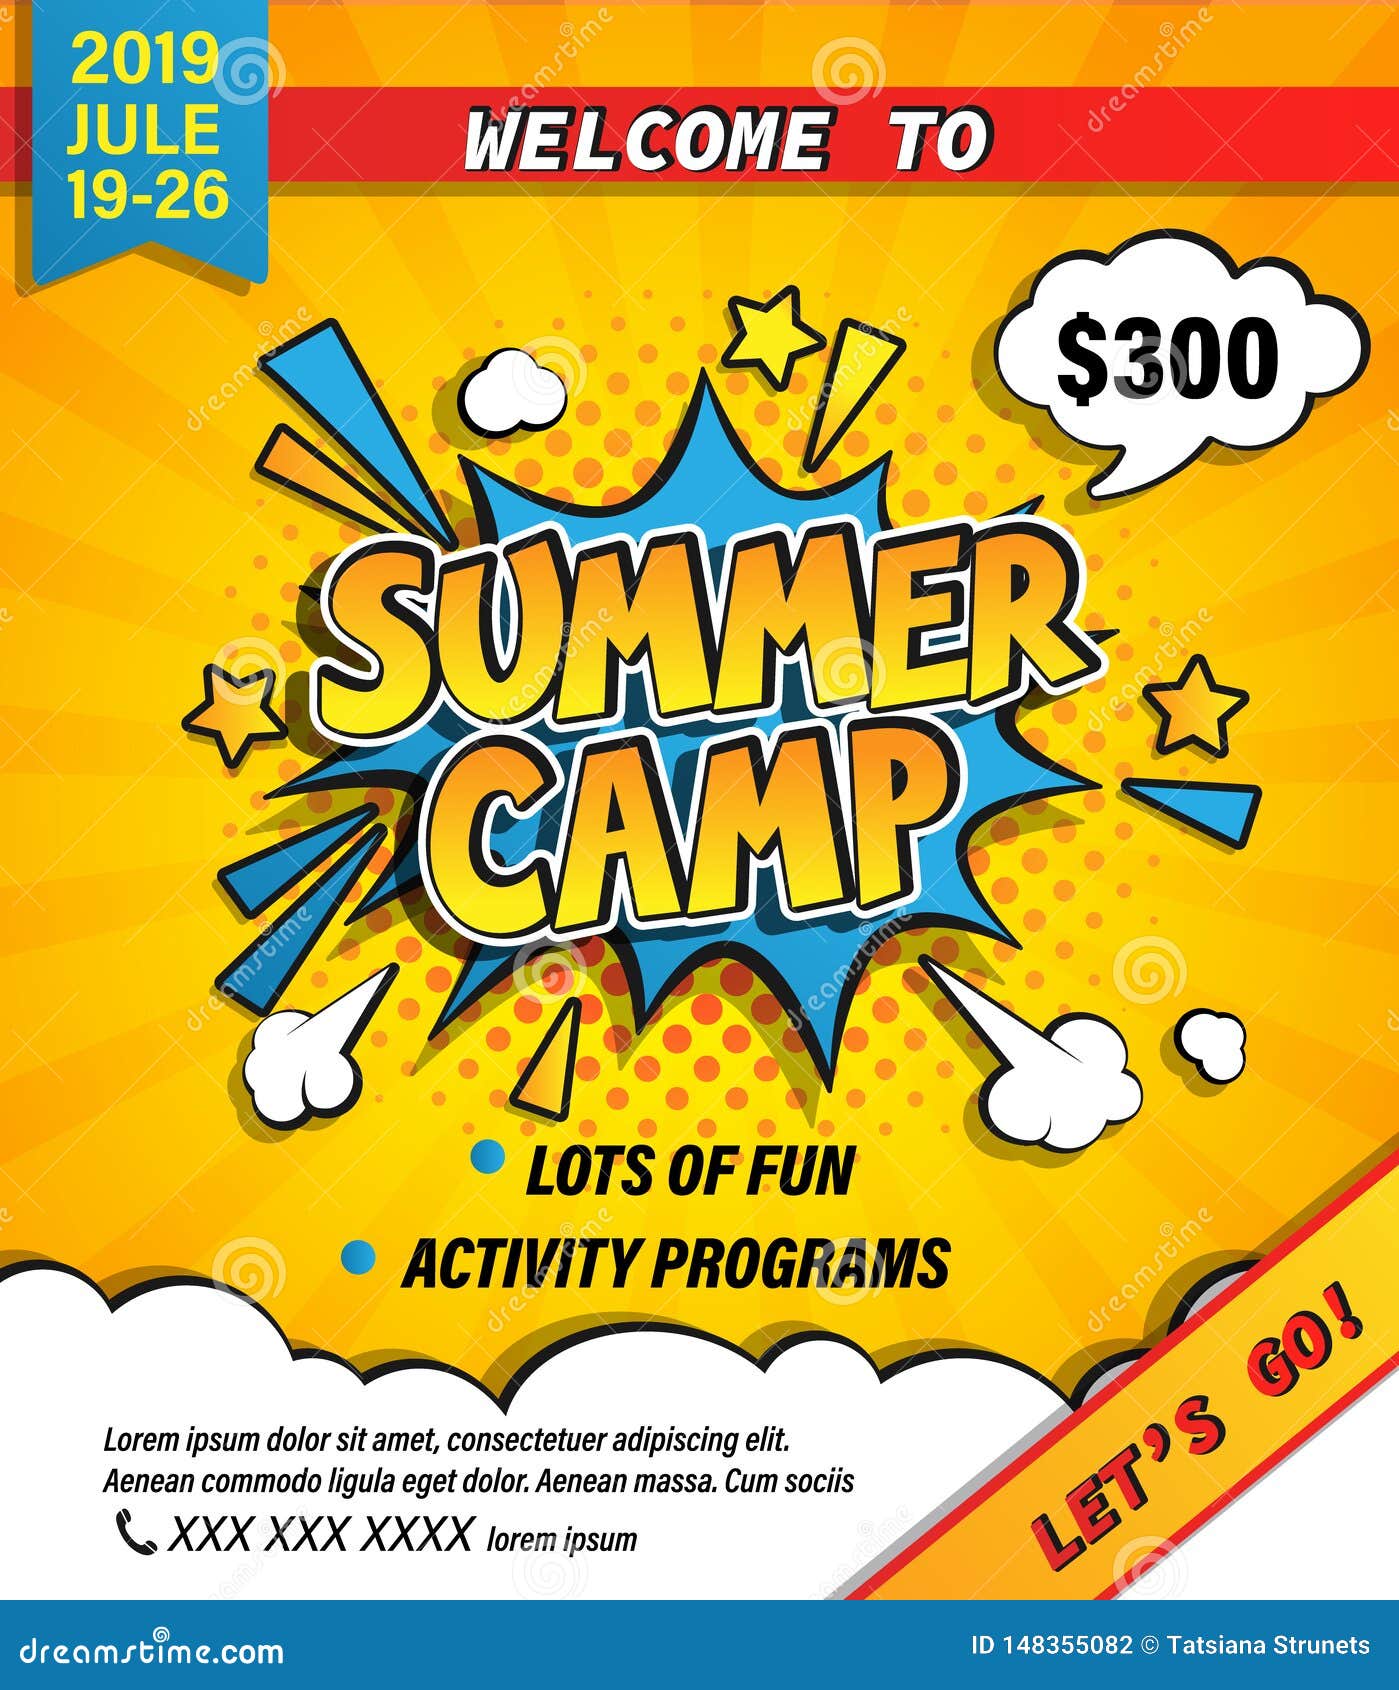 summer camp invitation banner.